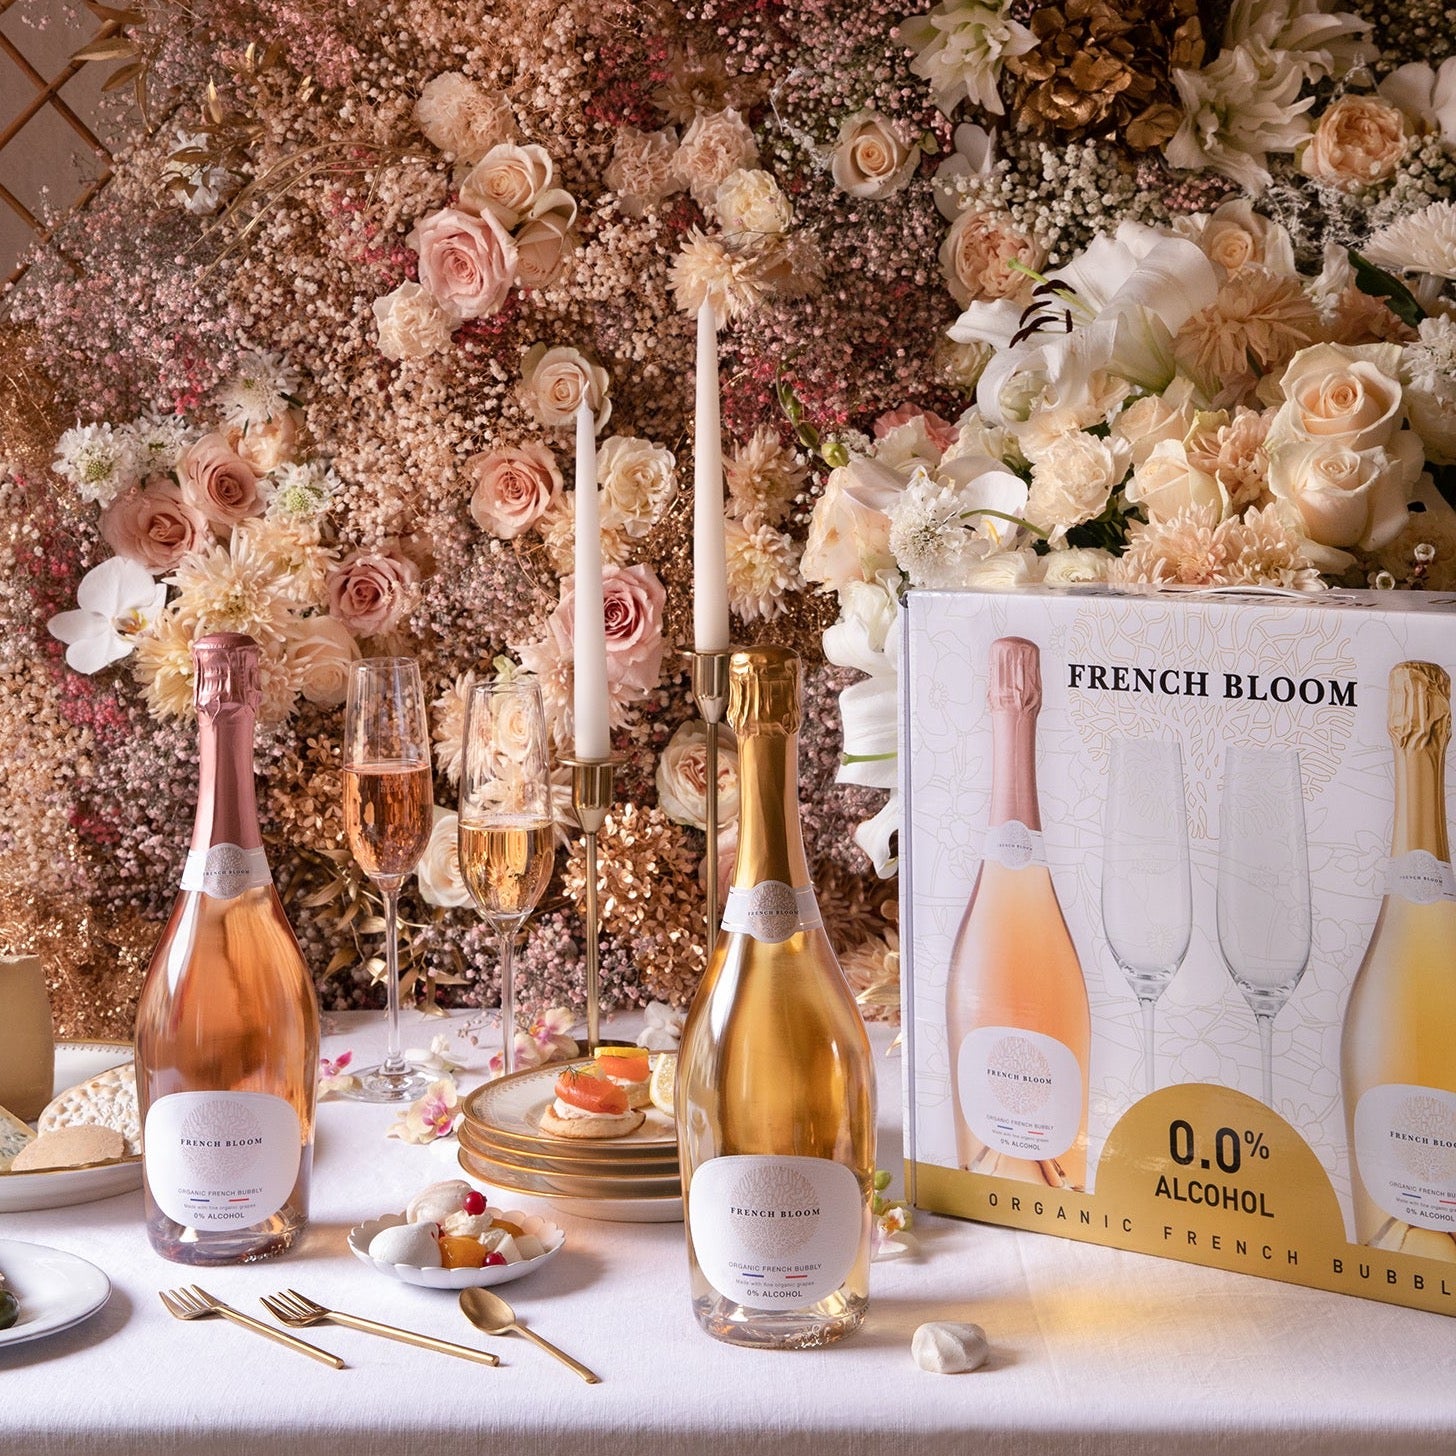 French Bloom Discovery Set Le Blanc & Le Rosé 75cl + 2 Flutes